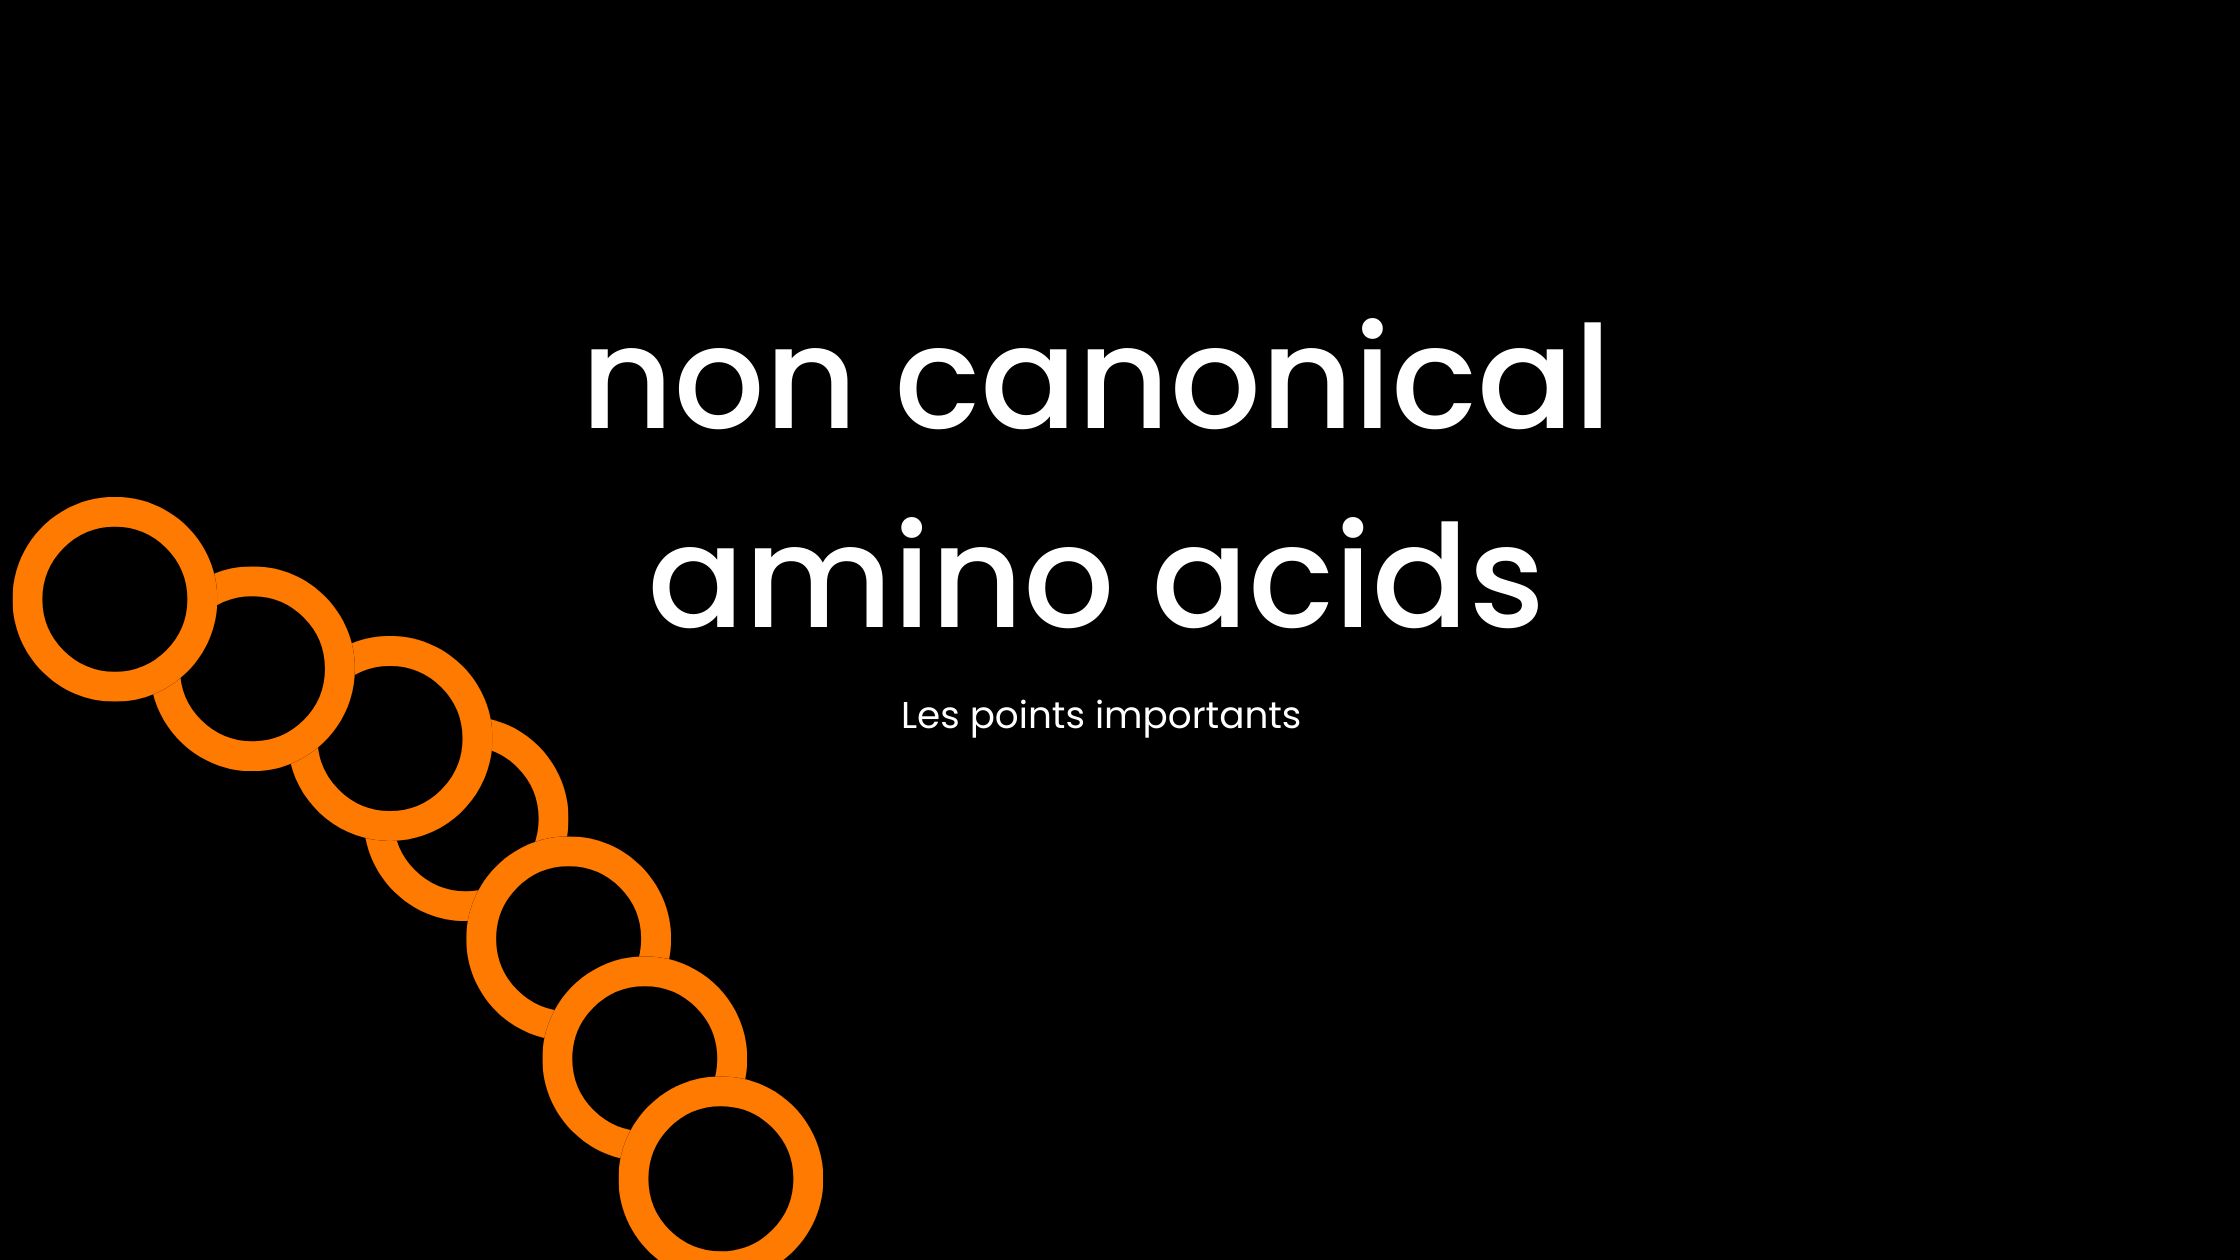 non canonical amino acids | Les points importants